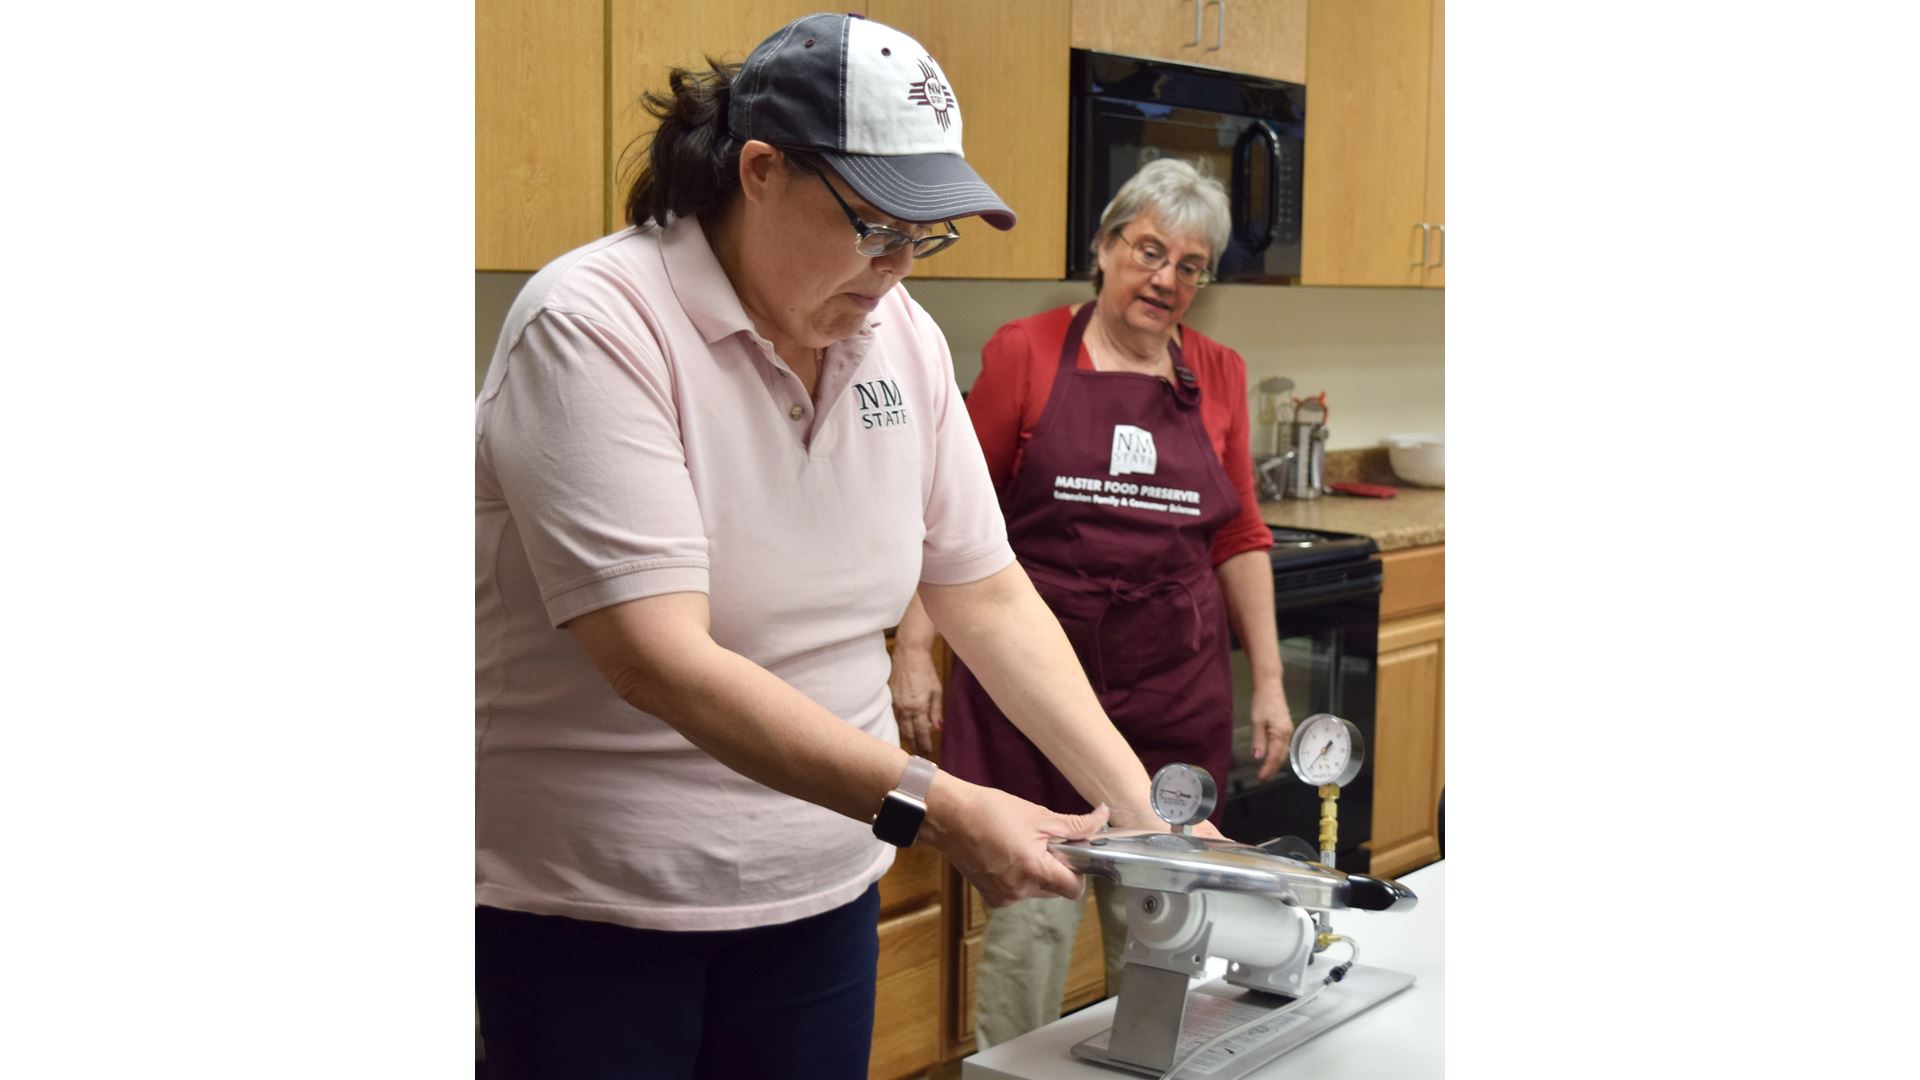 NMSU food professionals course expands dates, topics